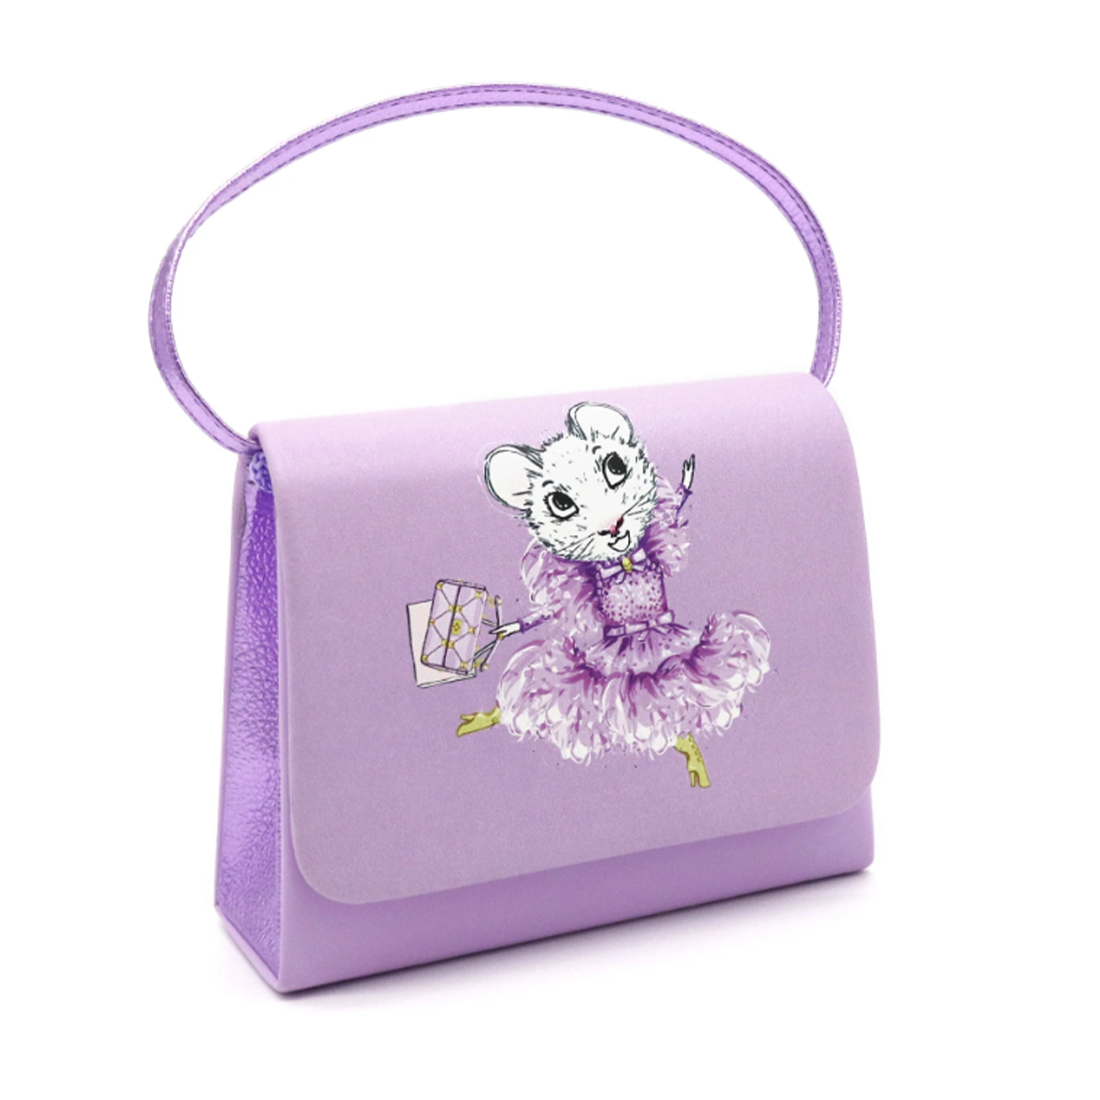 Claris The Secret Crown Mini Handbag in Lilac